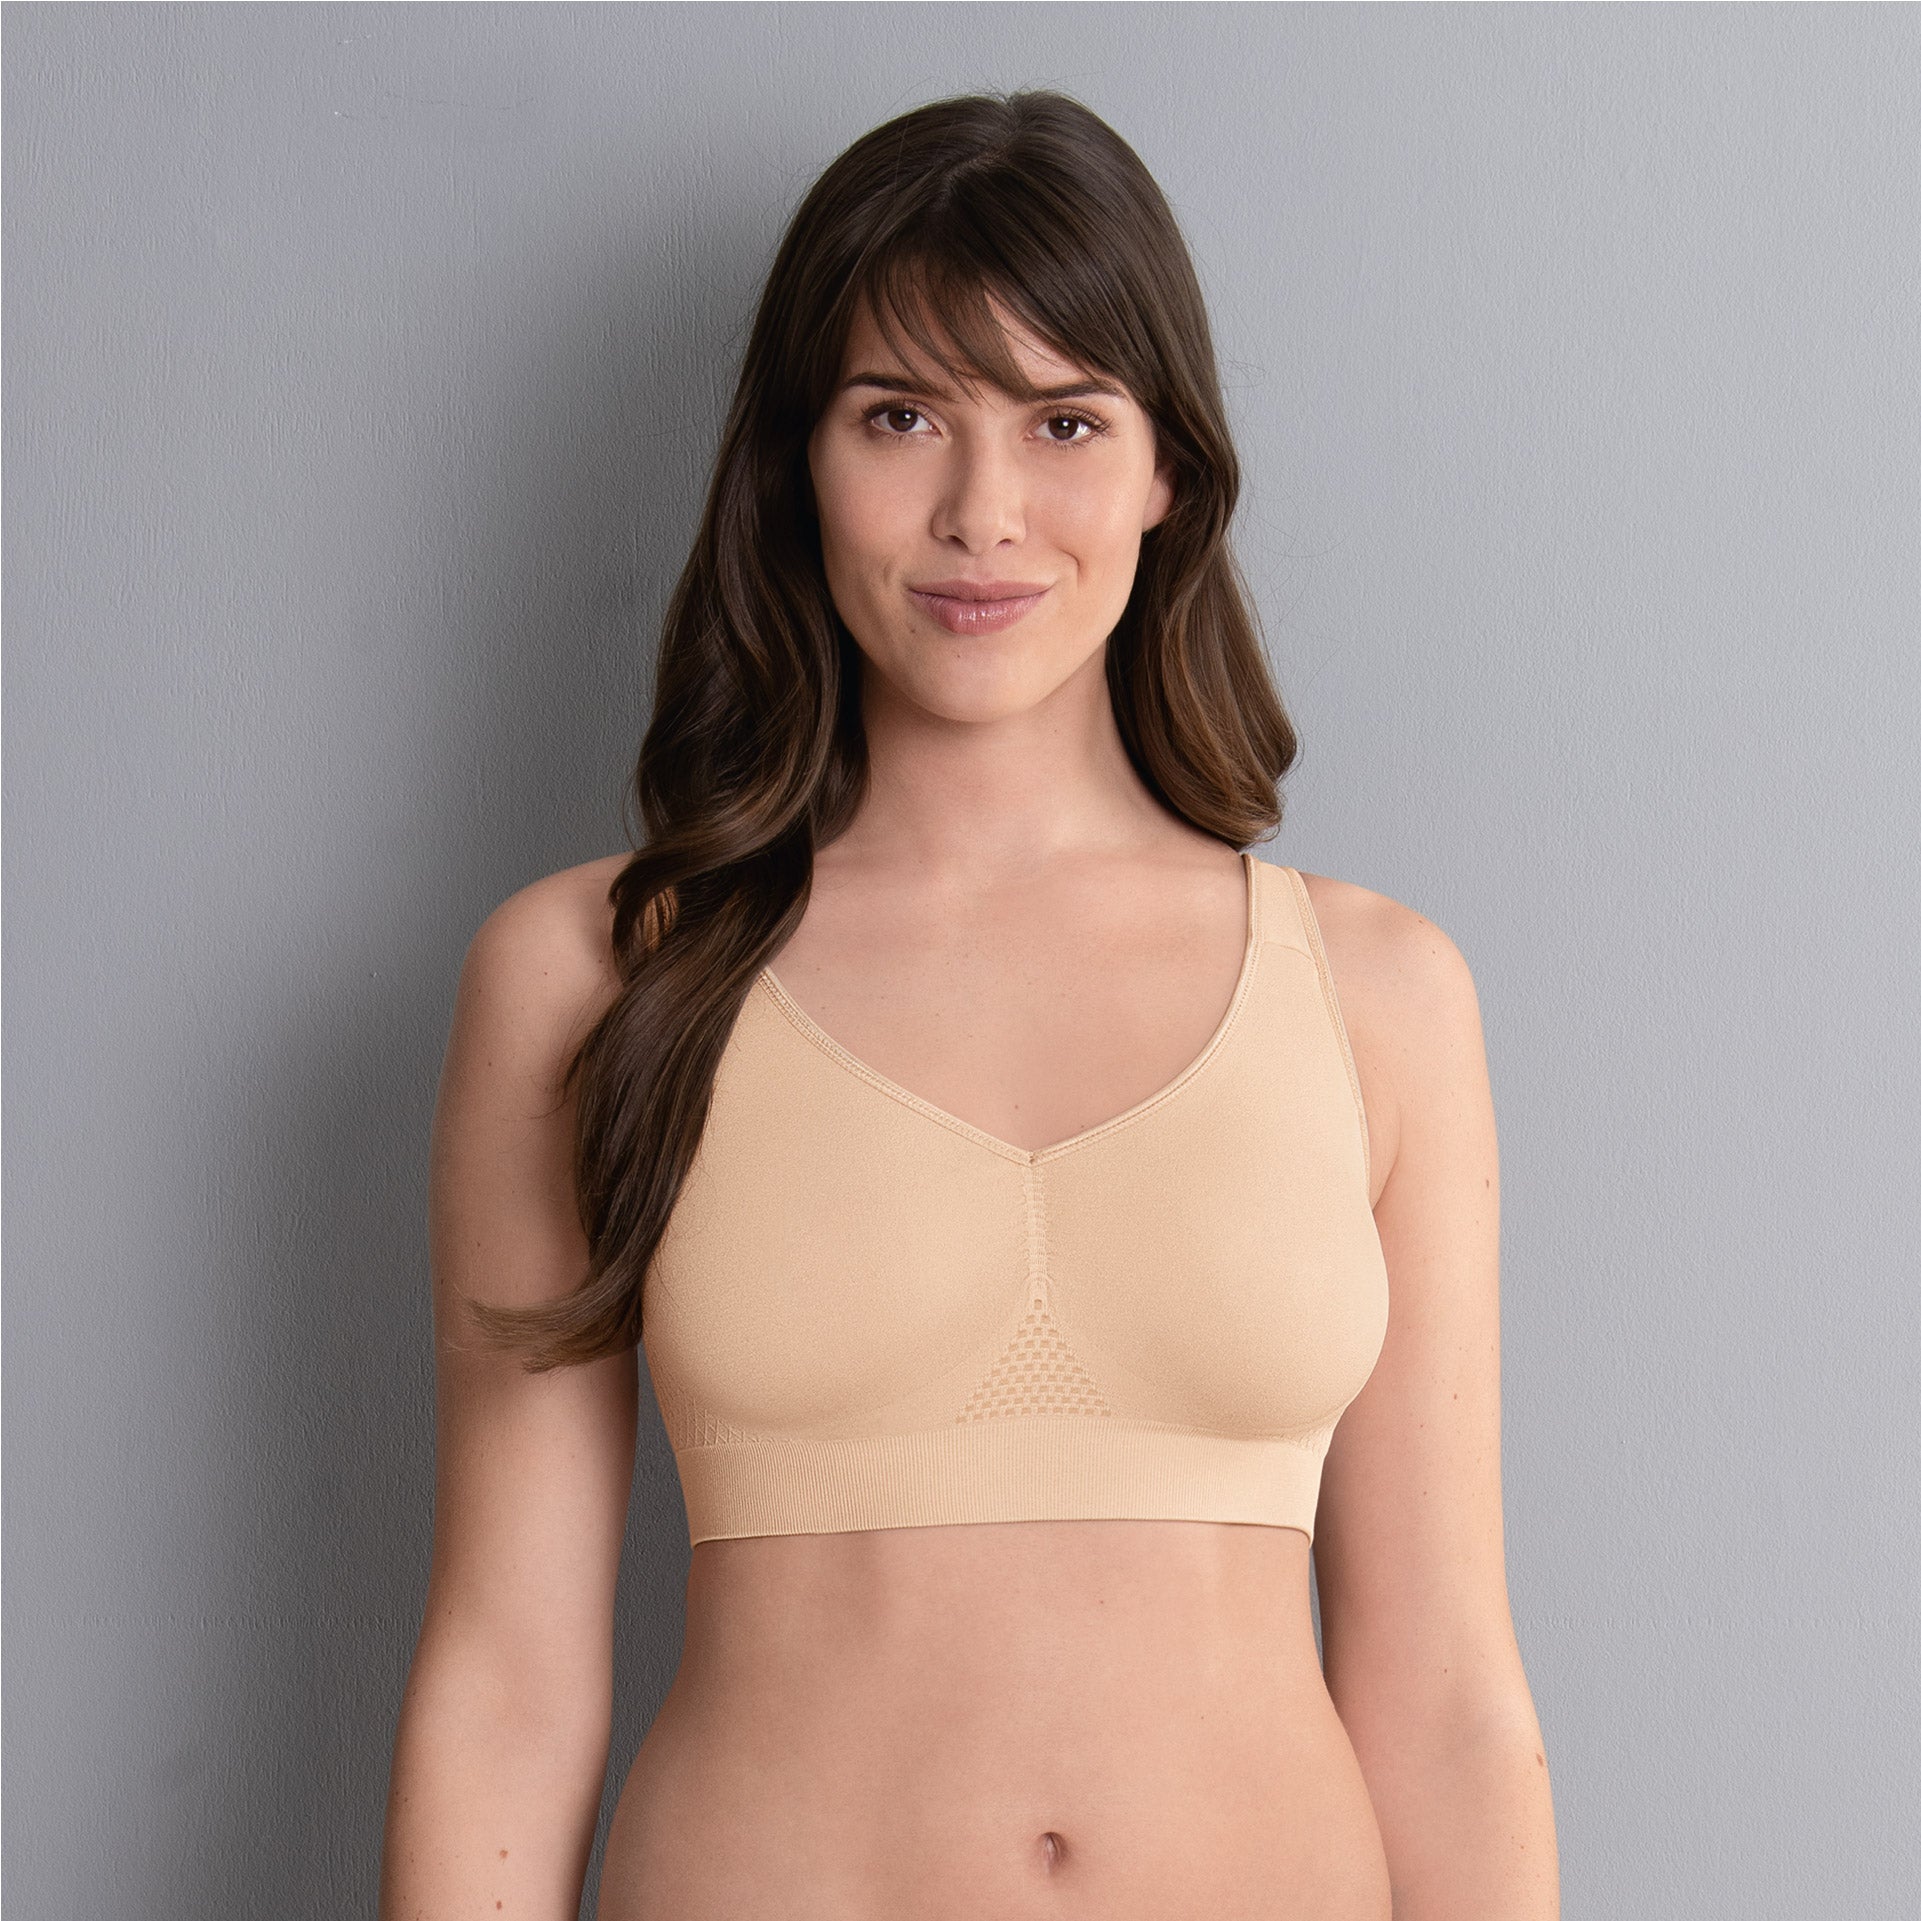 Bra+Insert Silicone Breast Forms Seamless Pocket Padded Mastectomy Bra  Comfortable Wire Free Bra Underwear Pads1884